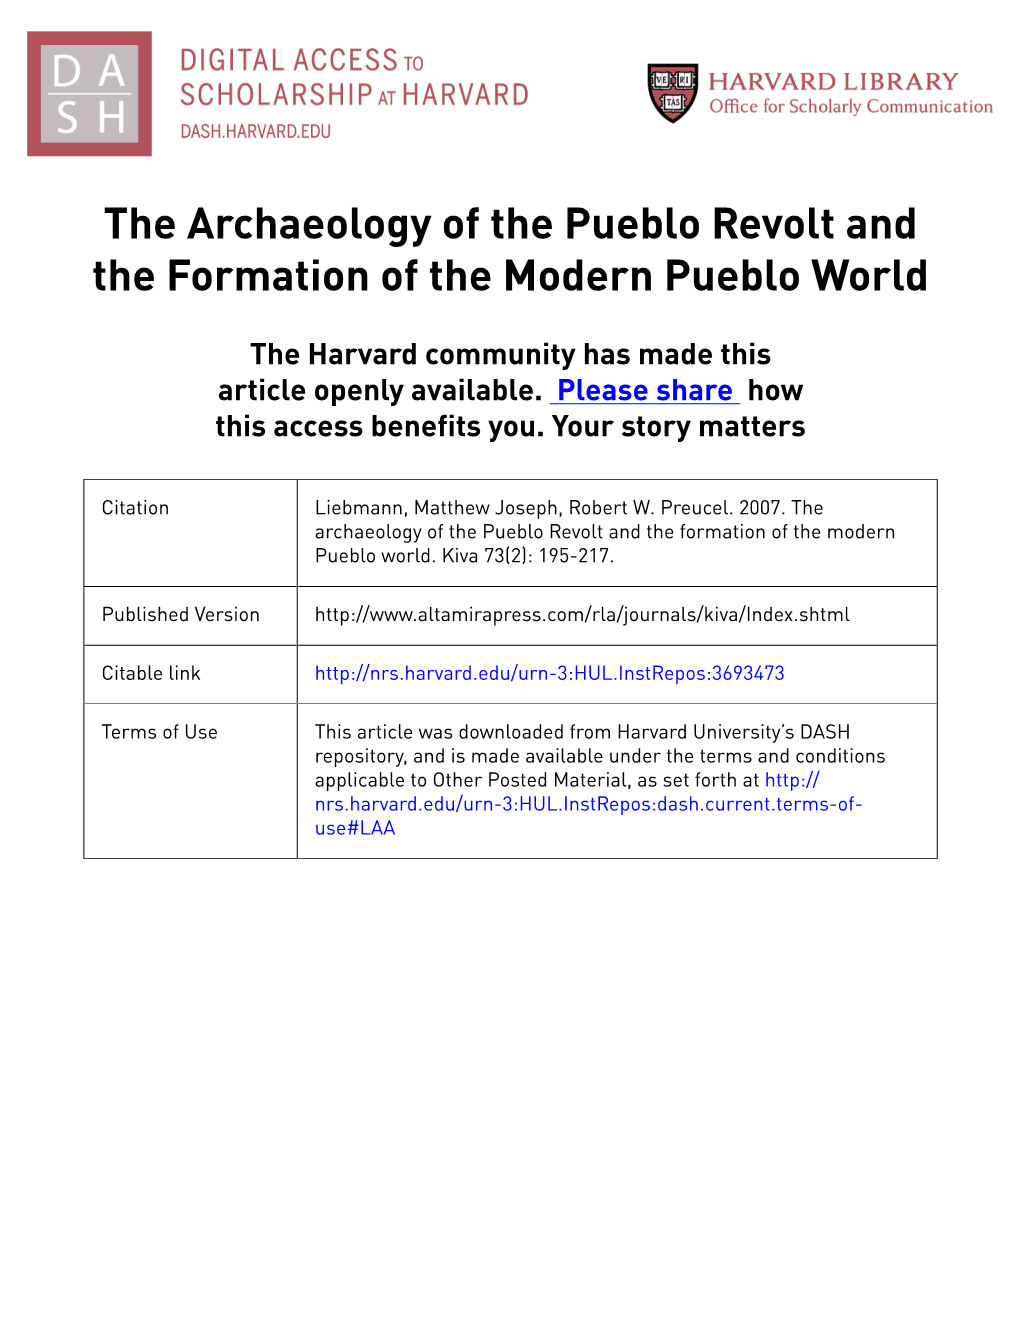 The Pueblo Revolt and the Formation of the Modern Pueblo World